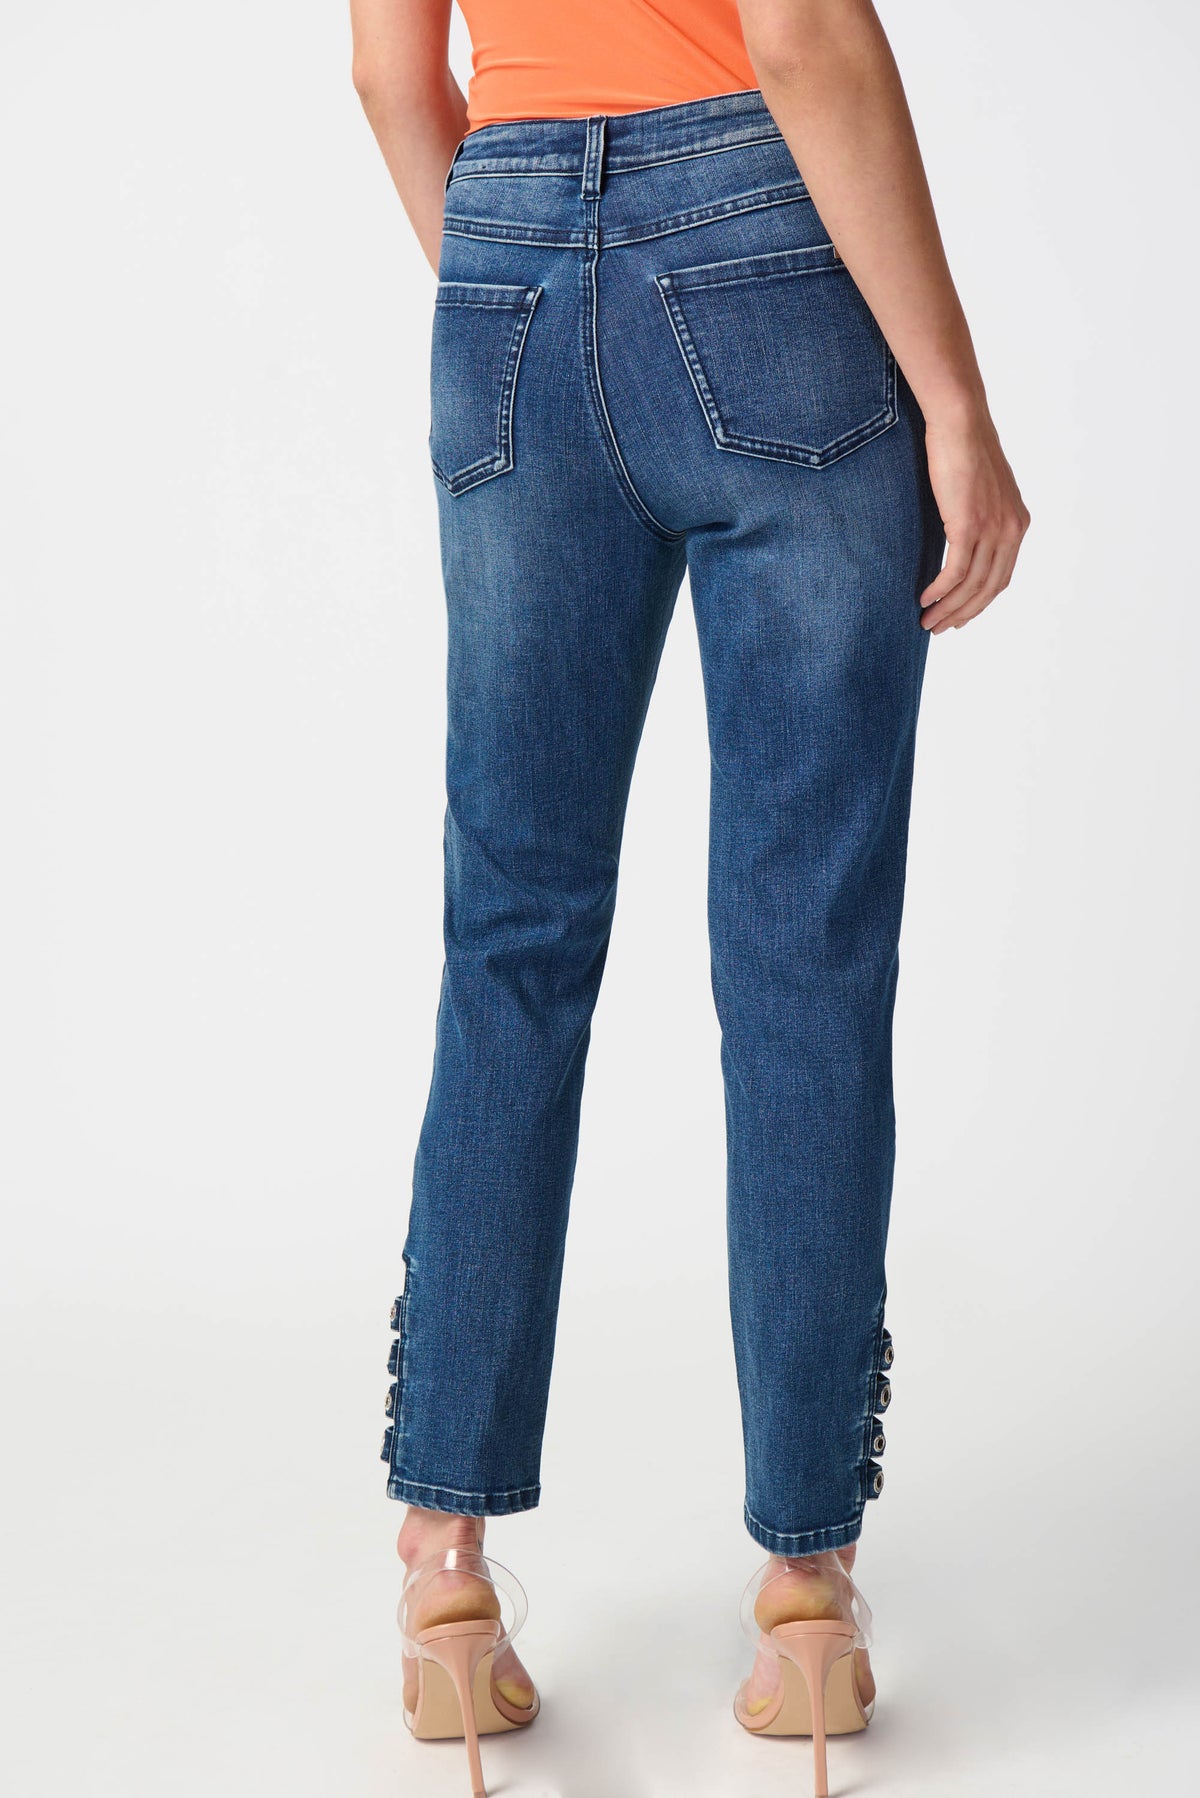 Joseph Ribkoff Slim Jeans